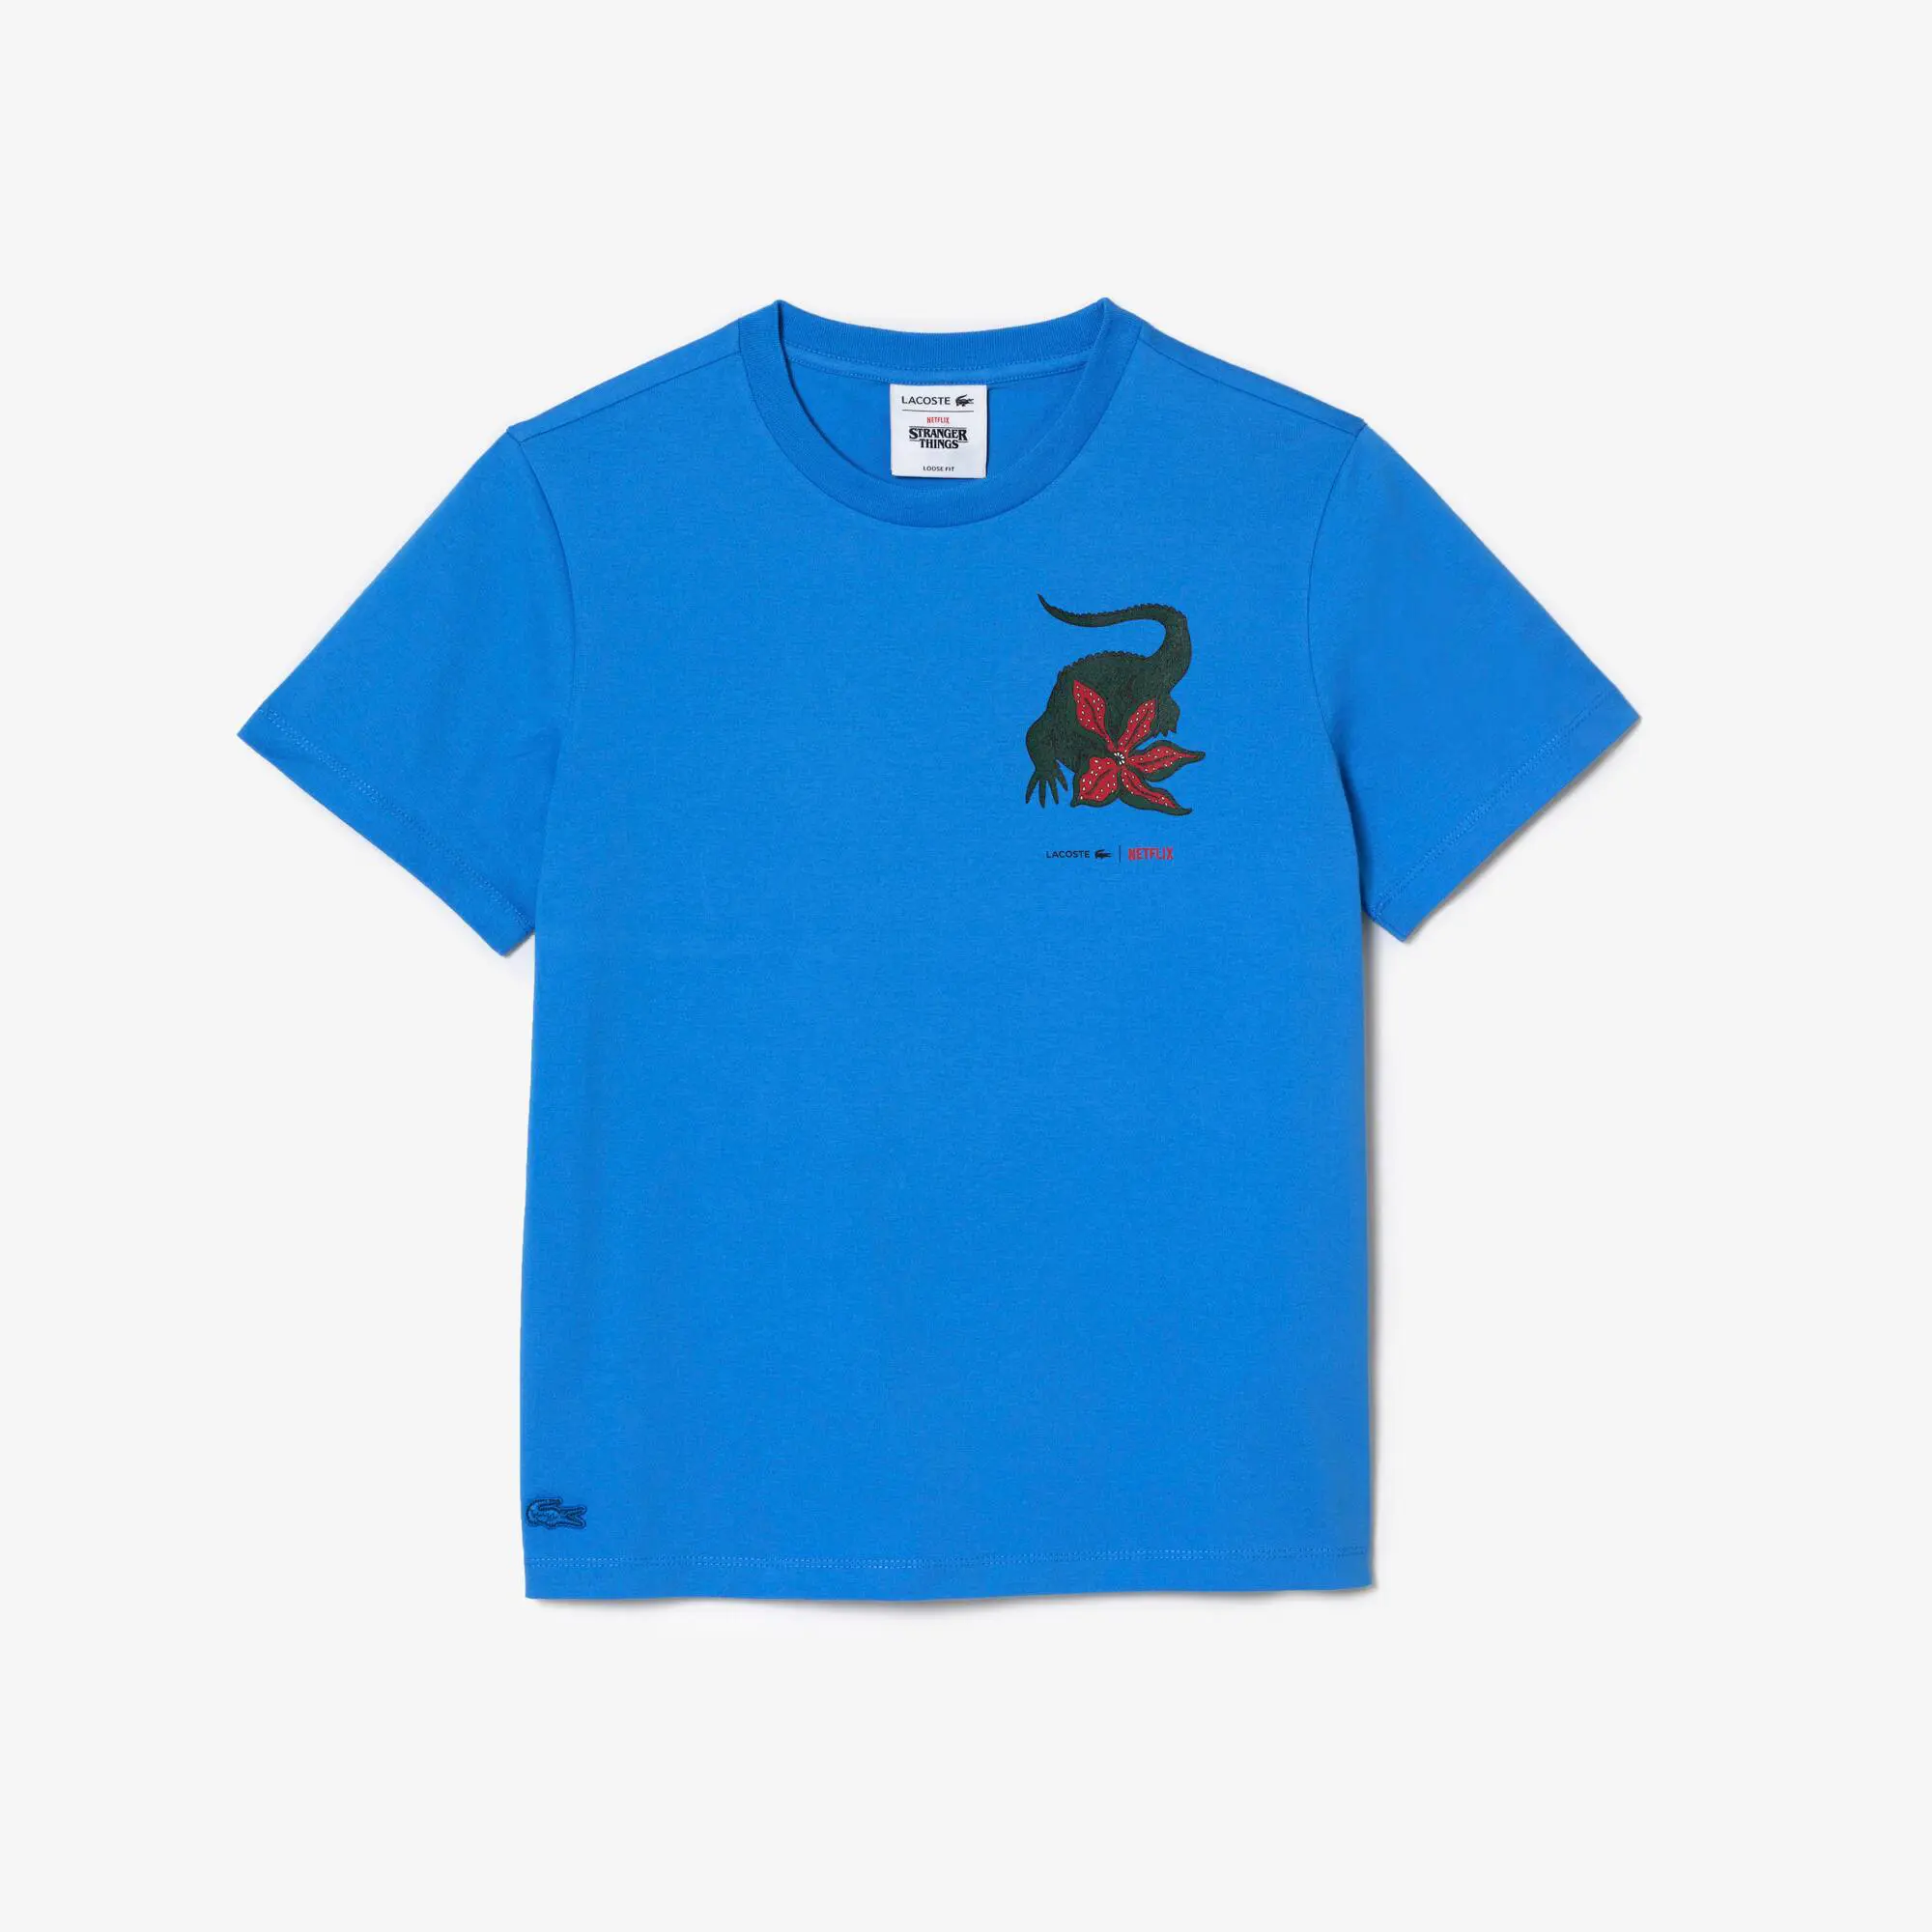 Lacoste Women’s Lacoste x Netflix Organic Cotton Jersey T-shirt. 2